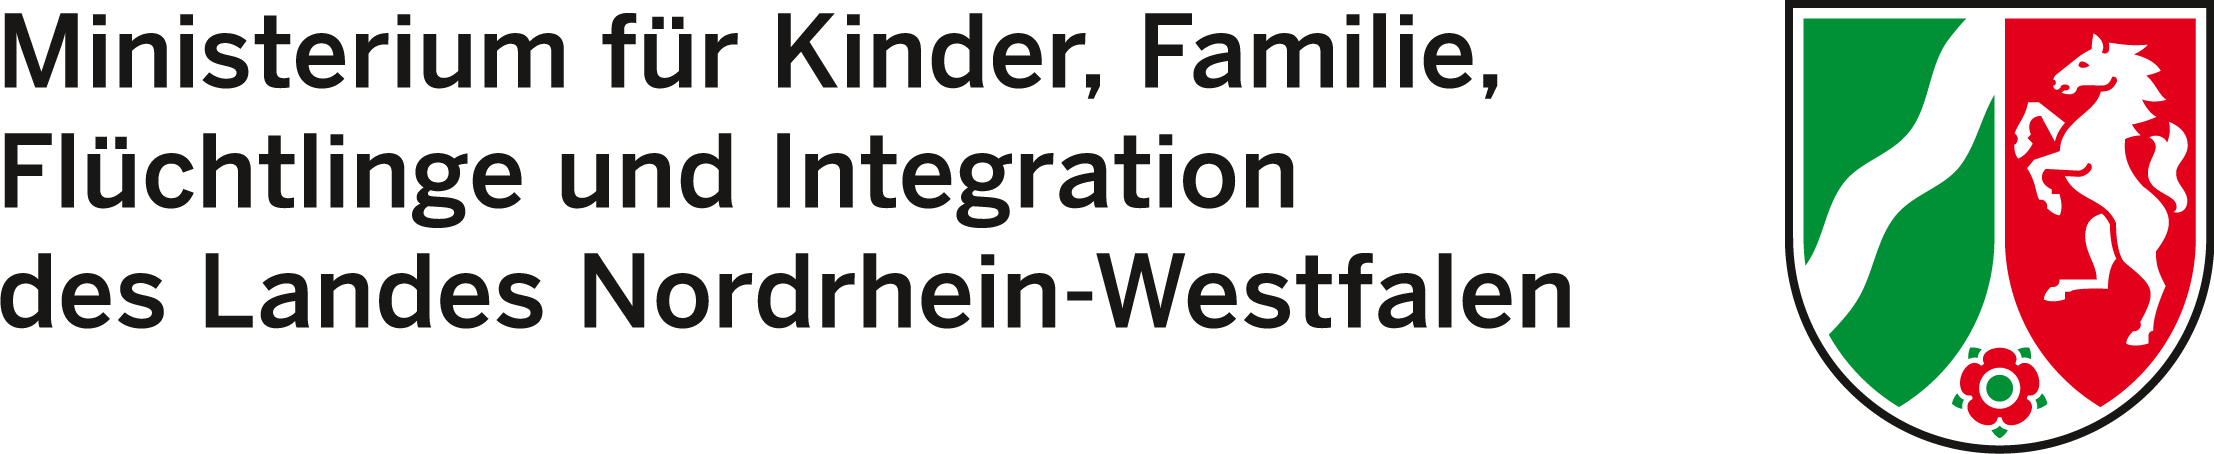 Logo des Ministeriums für Kinder, Familie, Flüchtlinge und Integration NRW